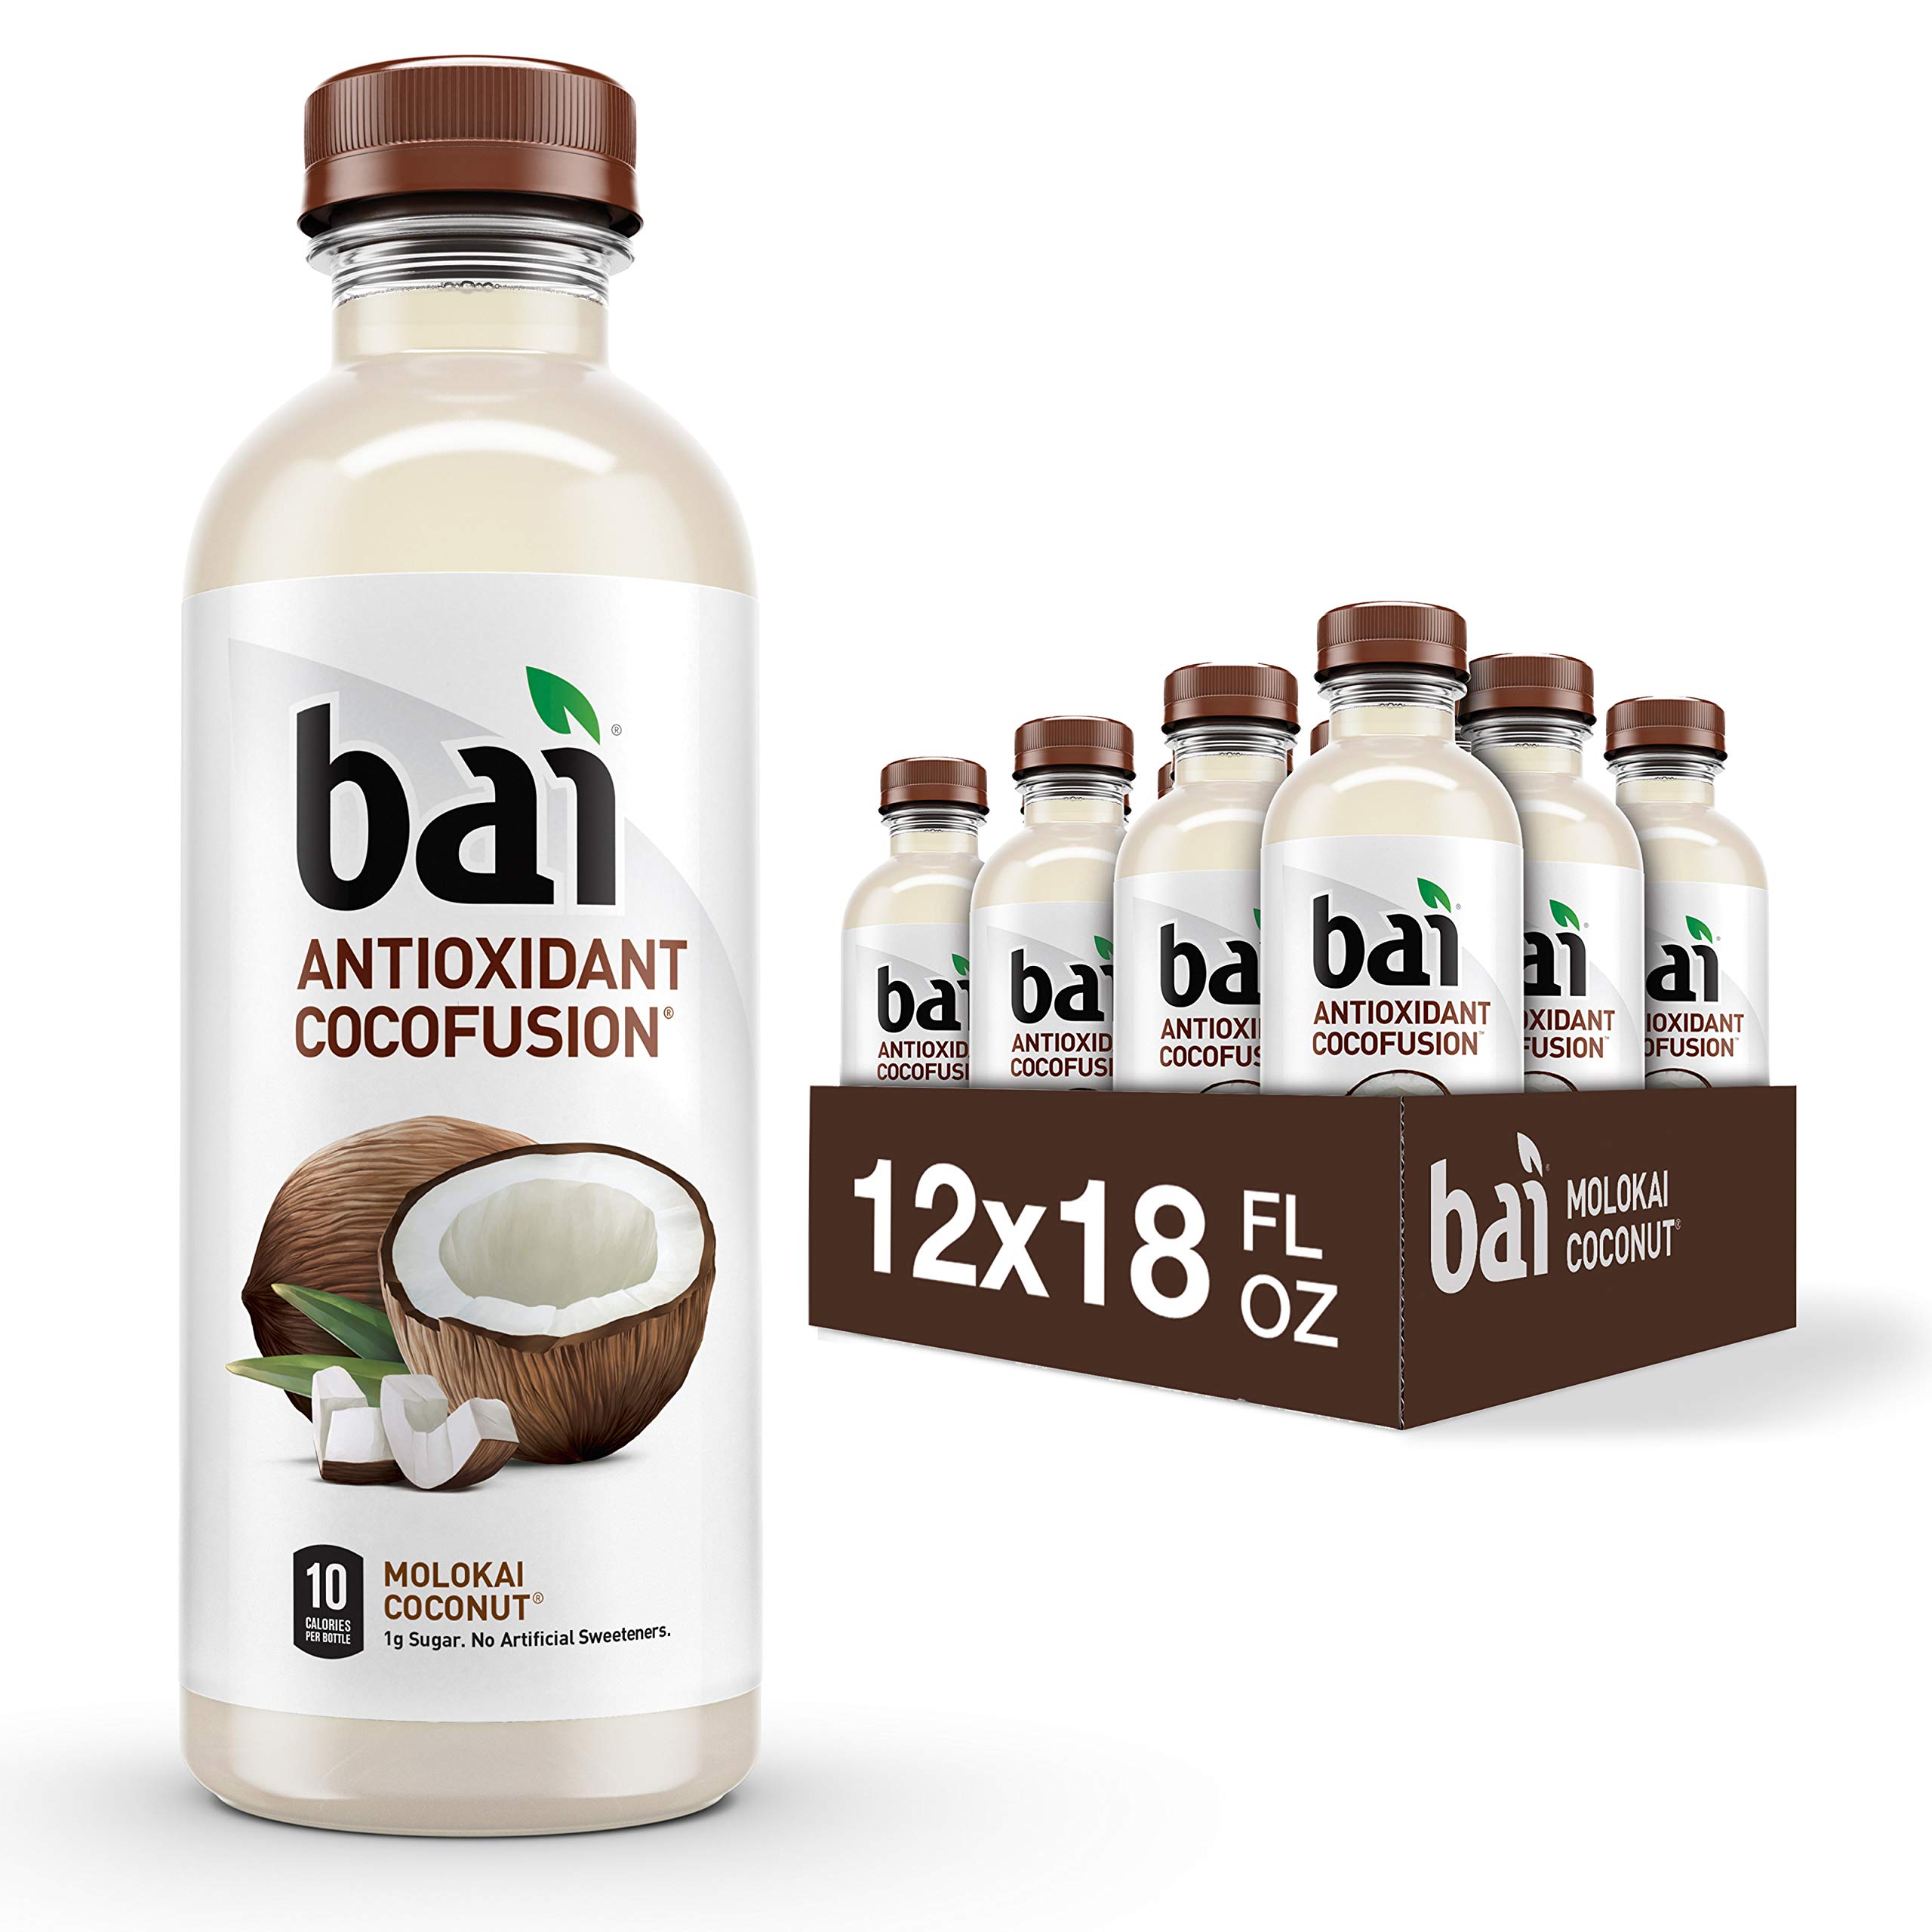 Bai Coconut Flavored Water, Molokai Coconut, Antioxidant Infused